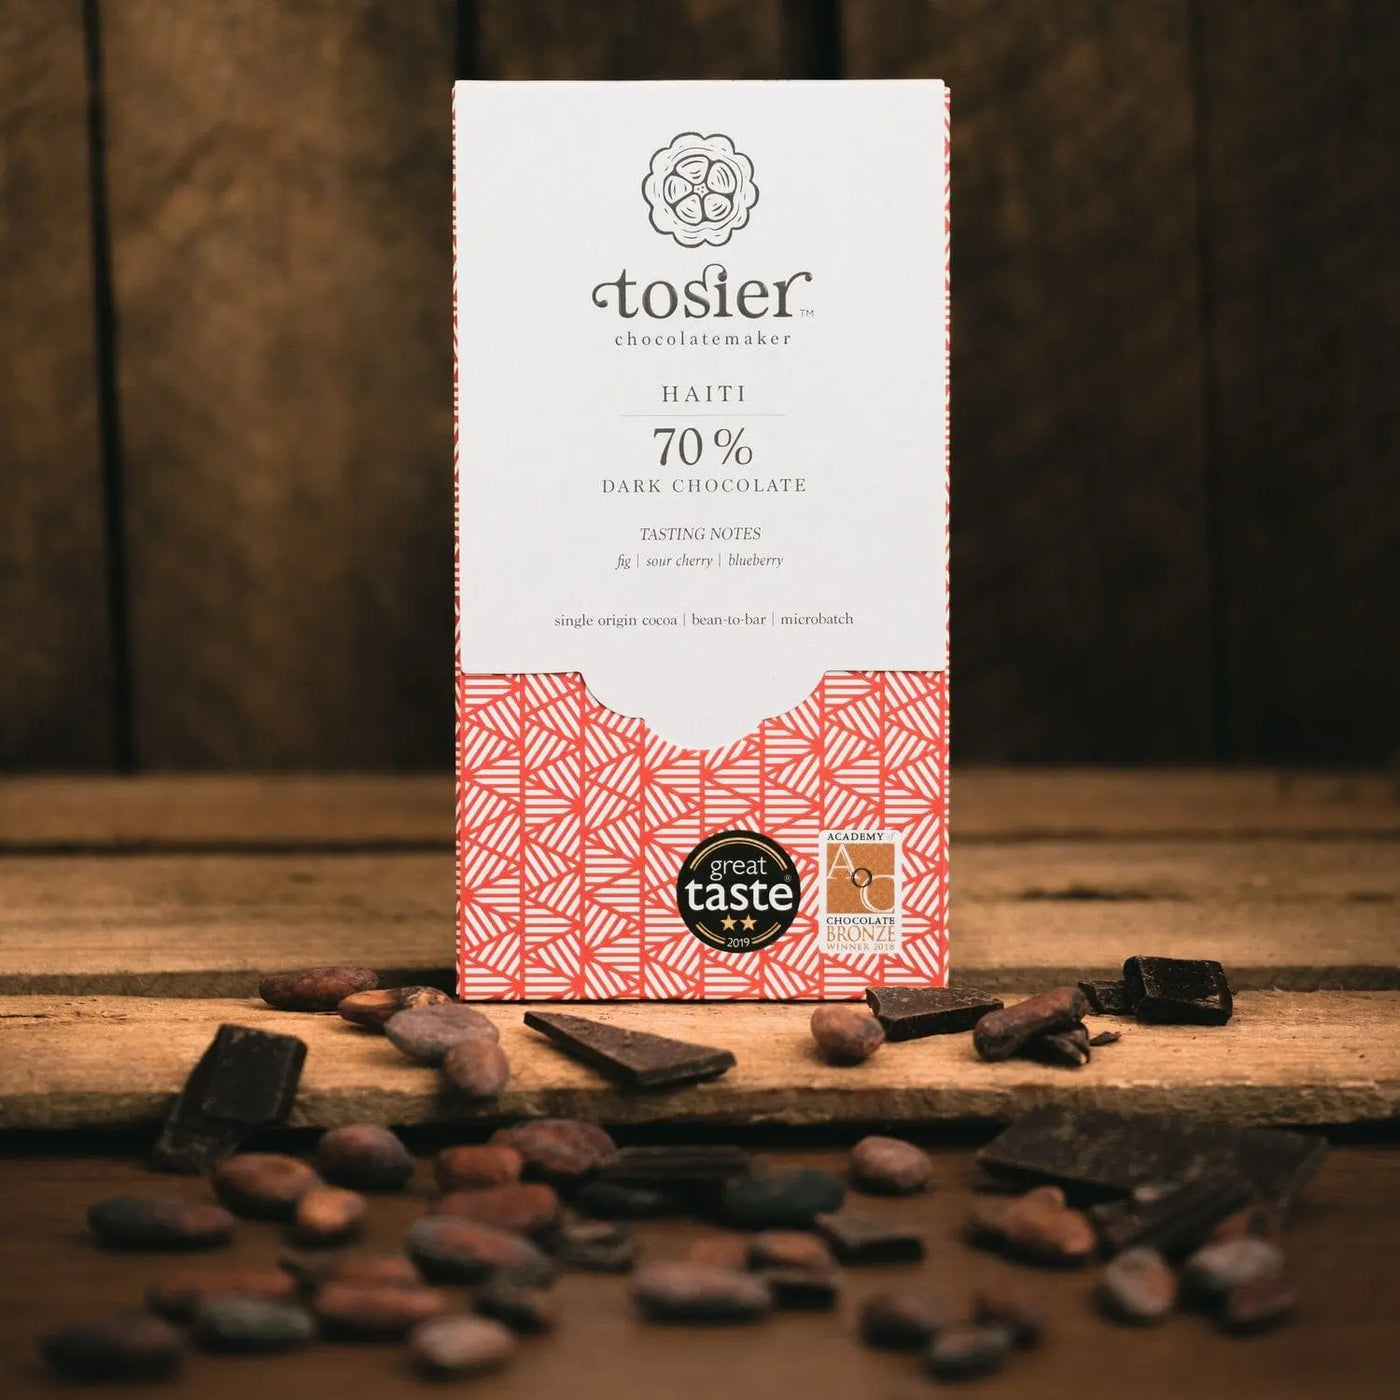 Tosier Chocolate 70% PISA Haiti 2020 Harvest 60g bar - Migration Museum Shop